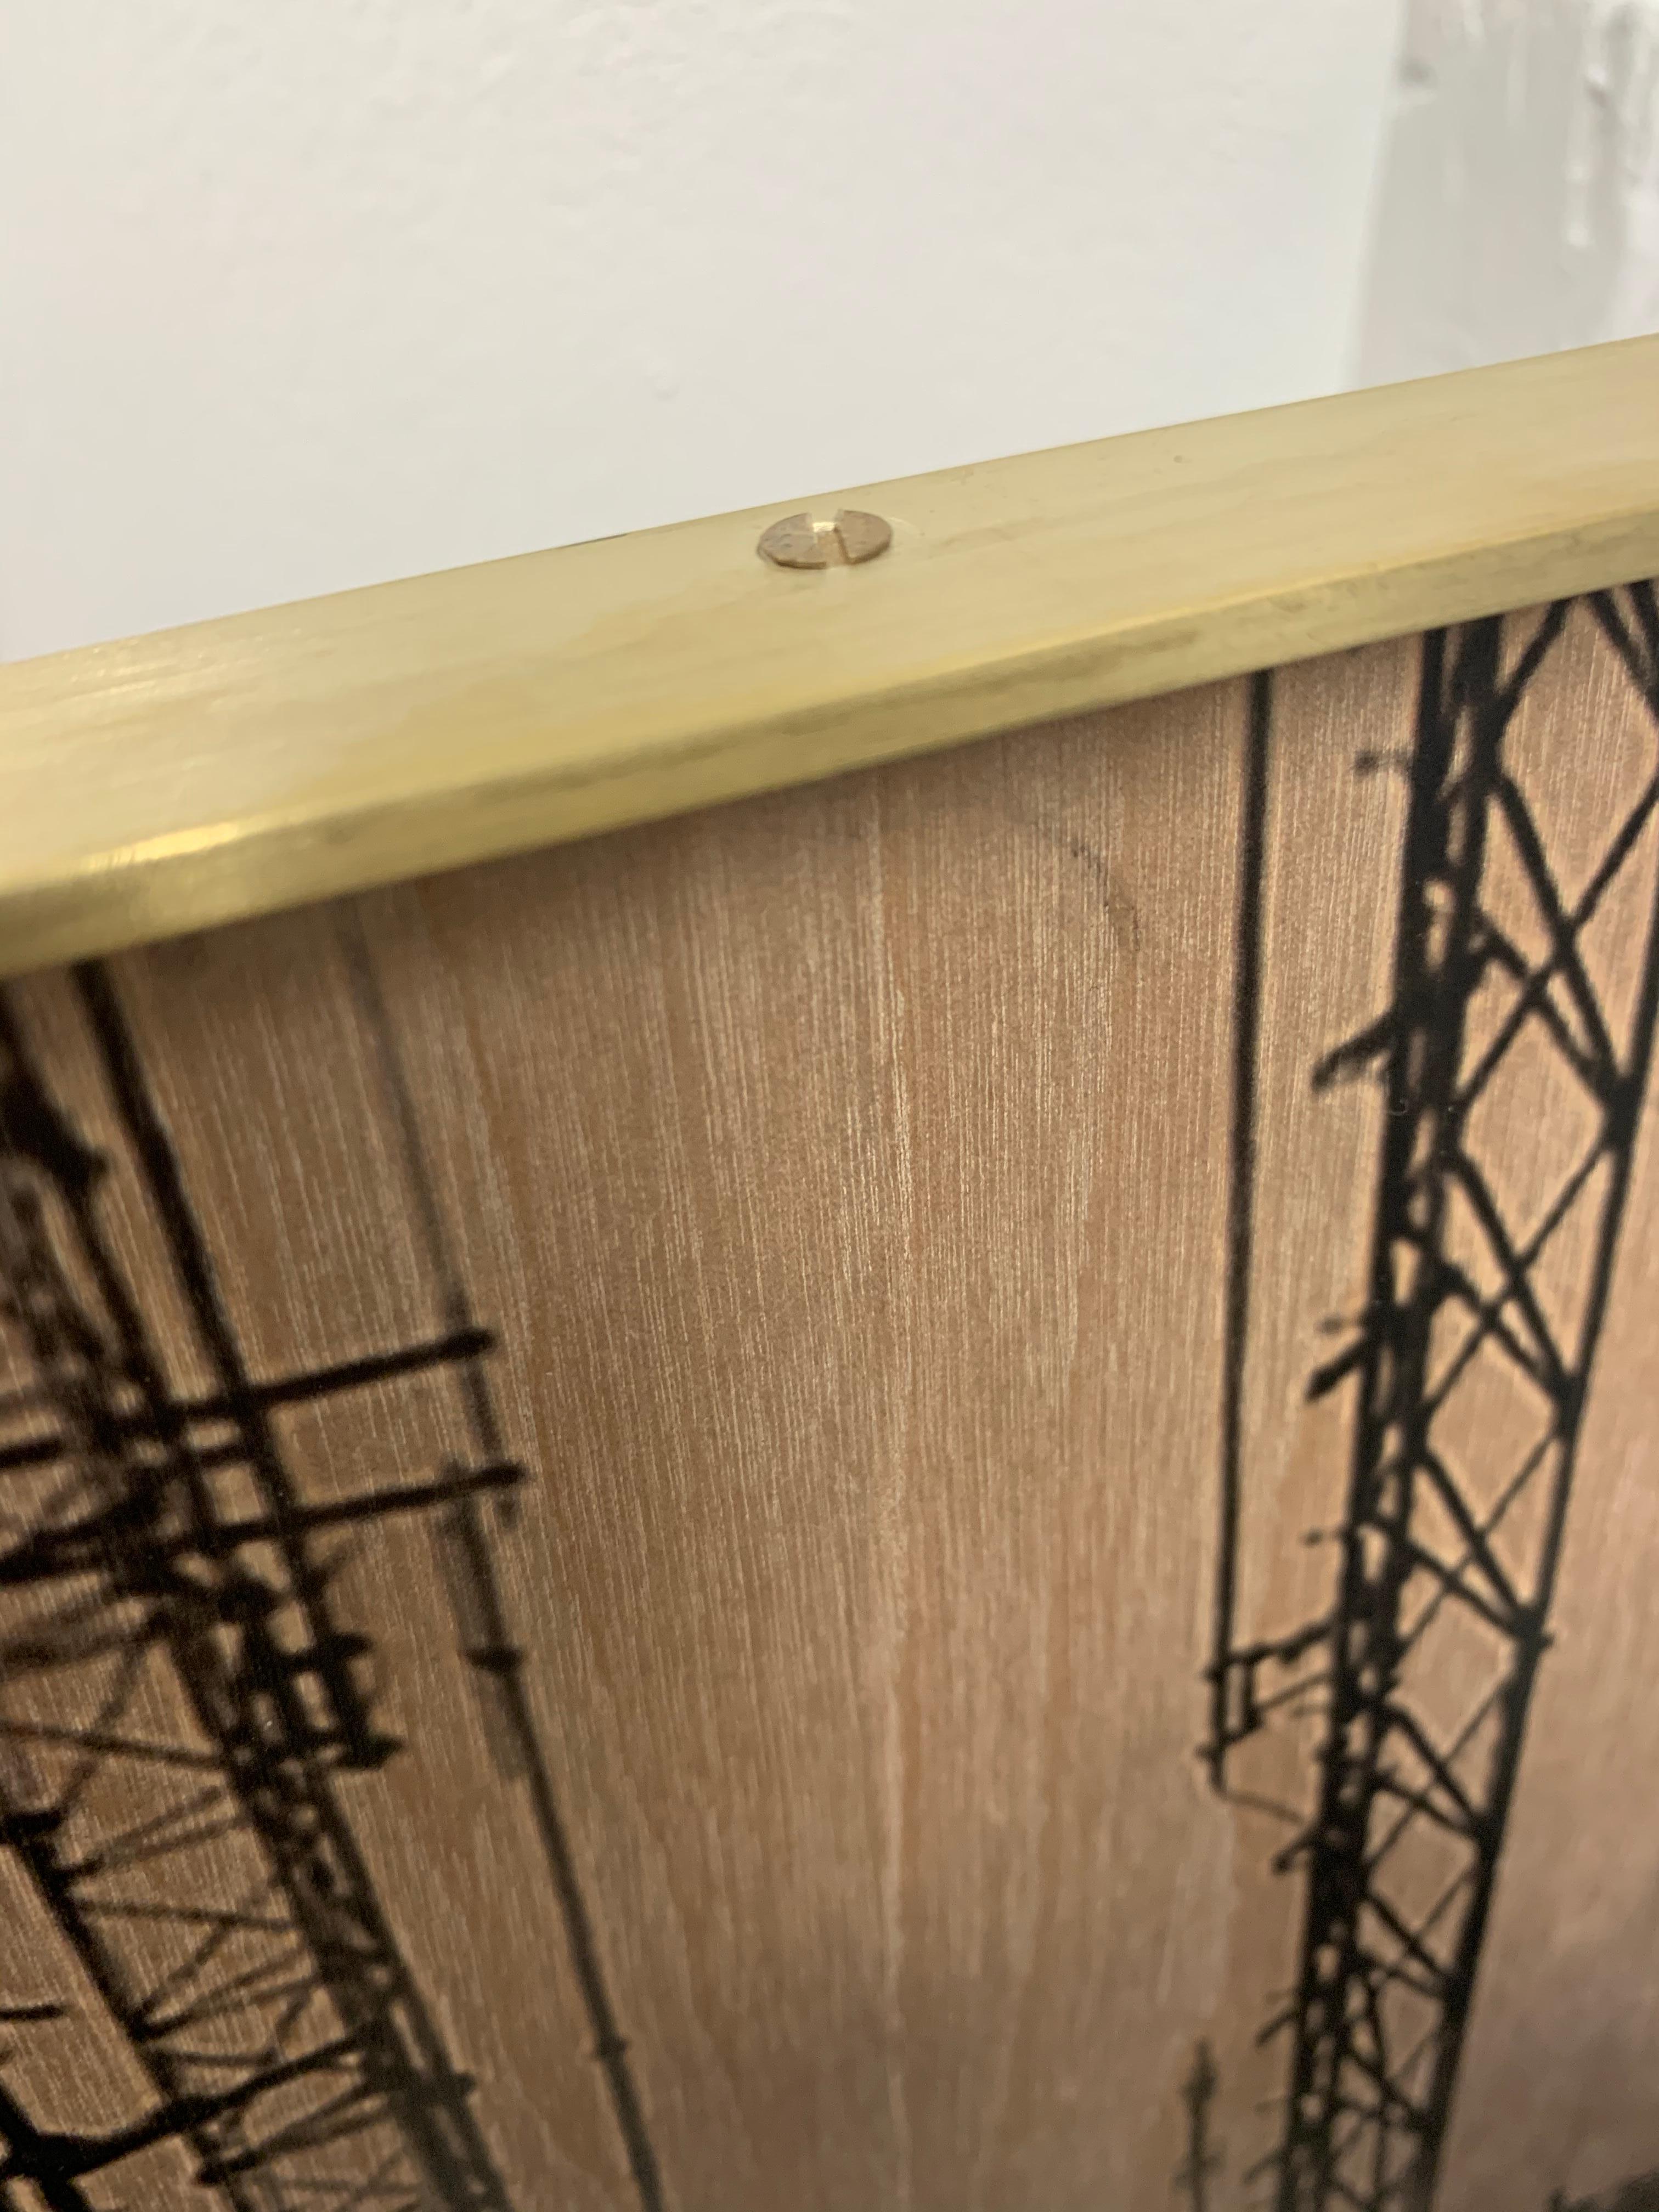 Fototransfer auf Holz mit Messingrahmen:: Leveque-Turm im Angebot 1